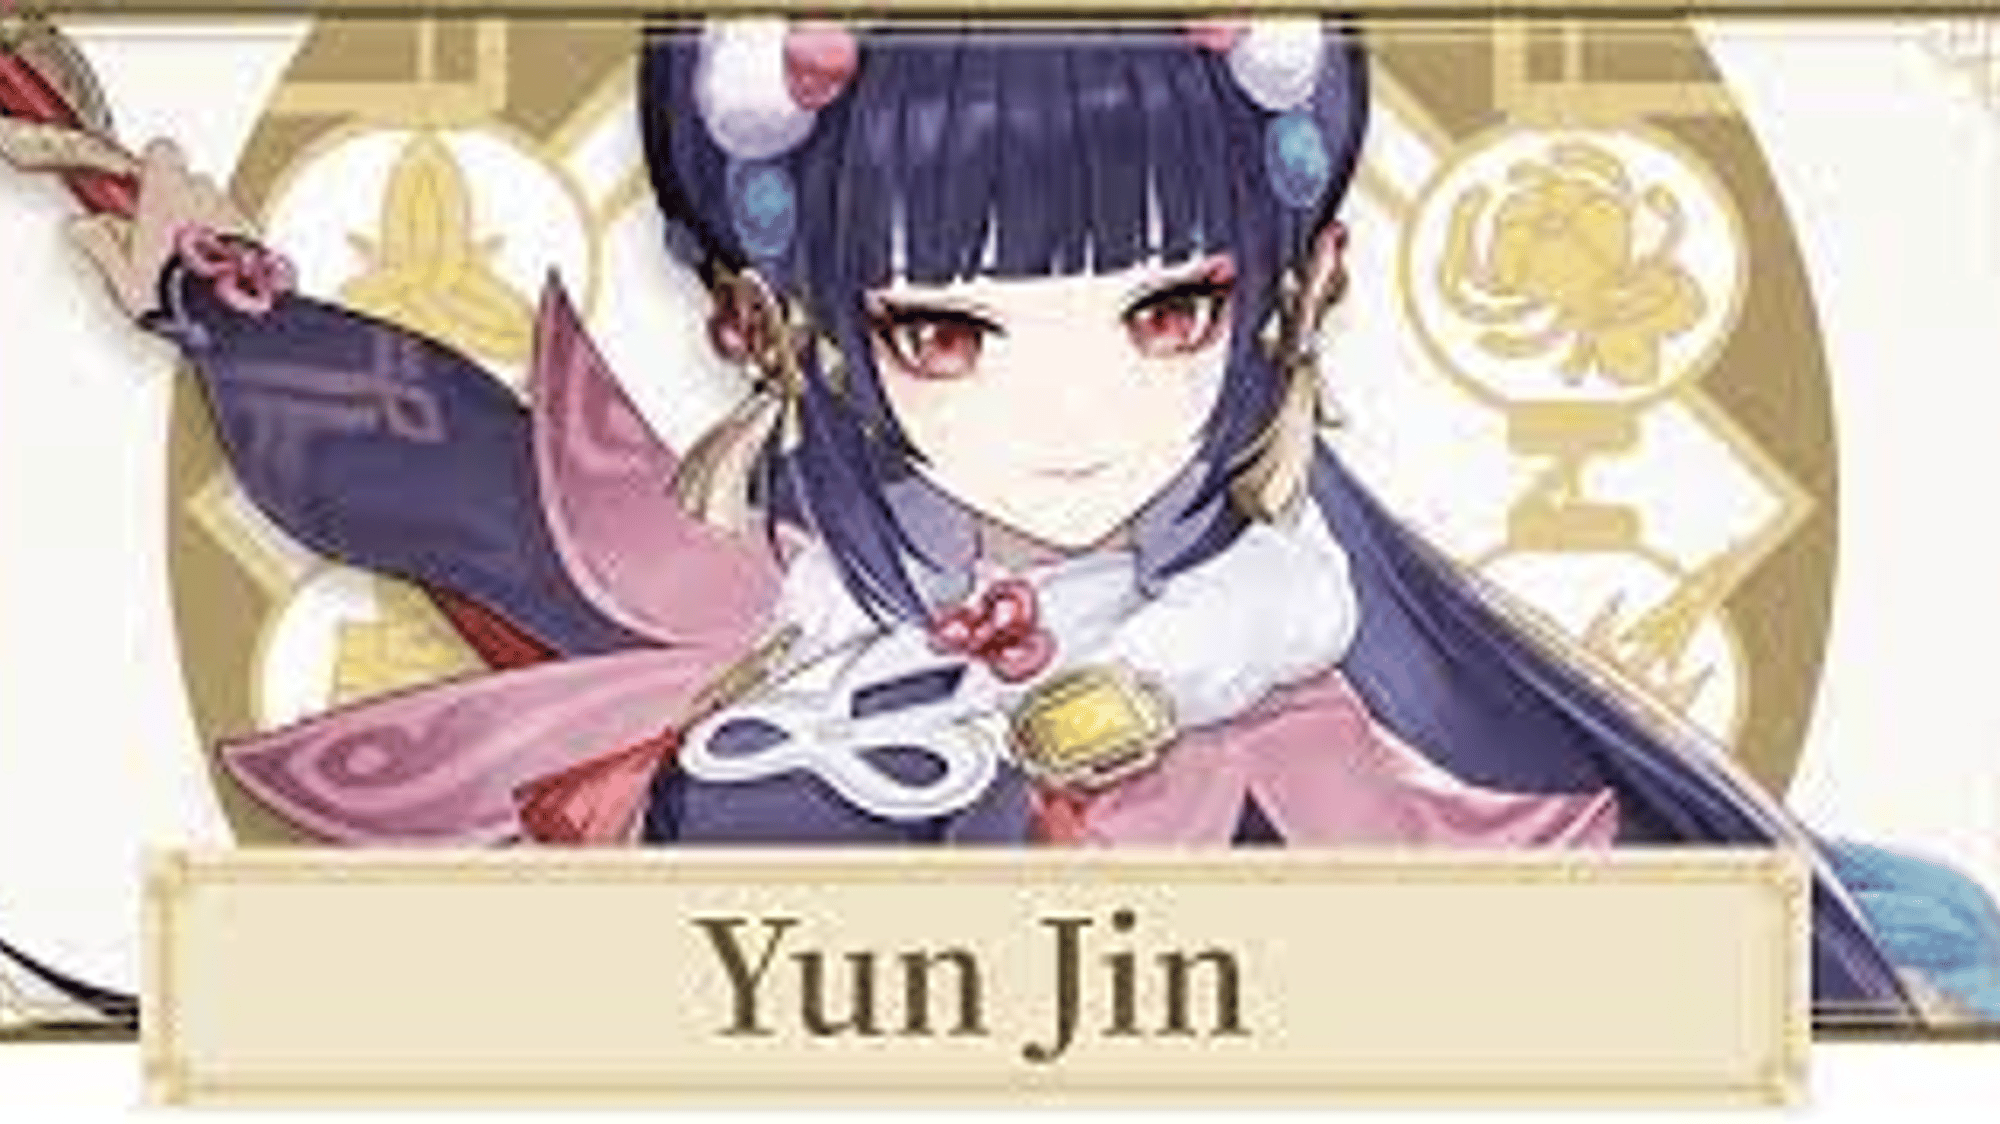 Yunjin